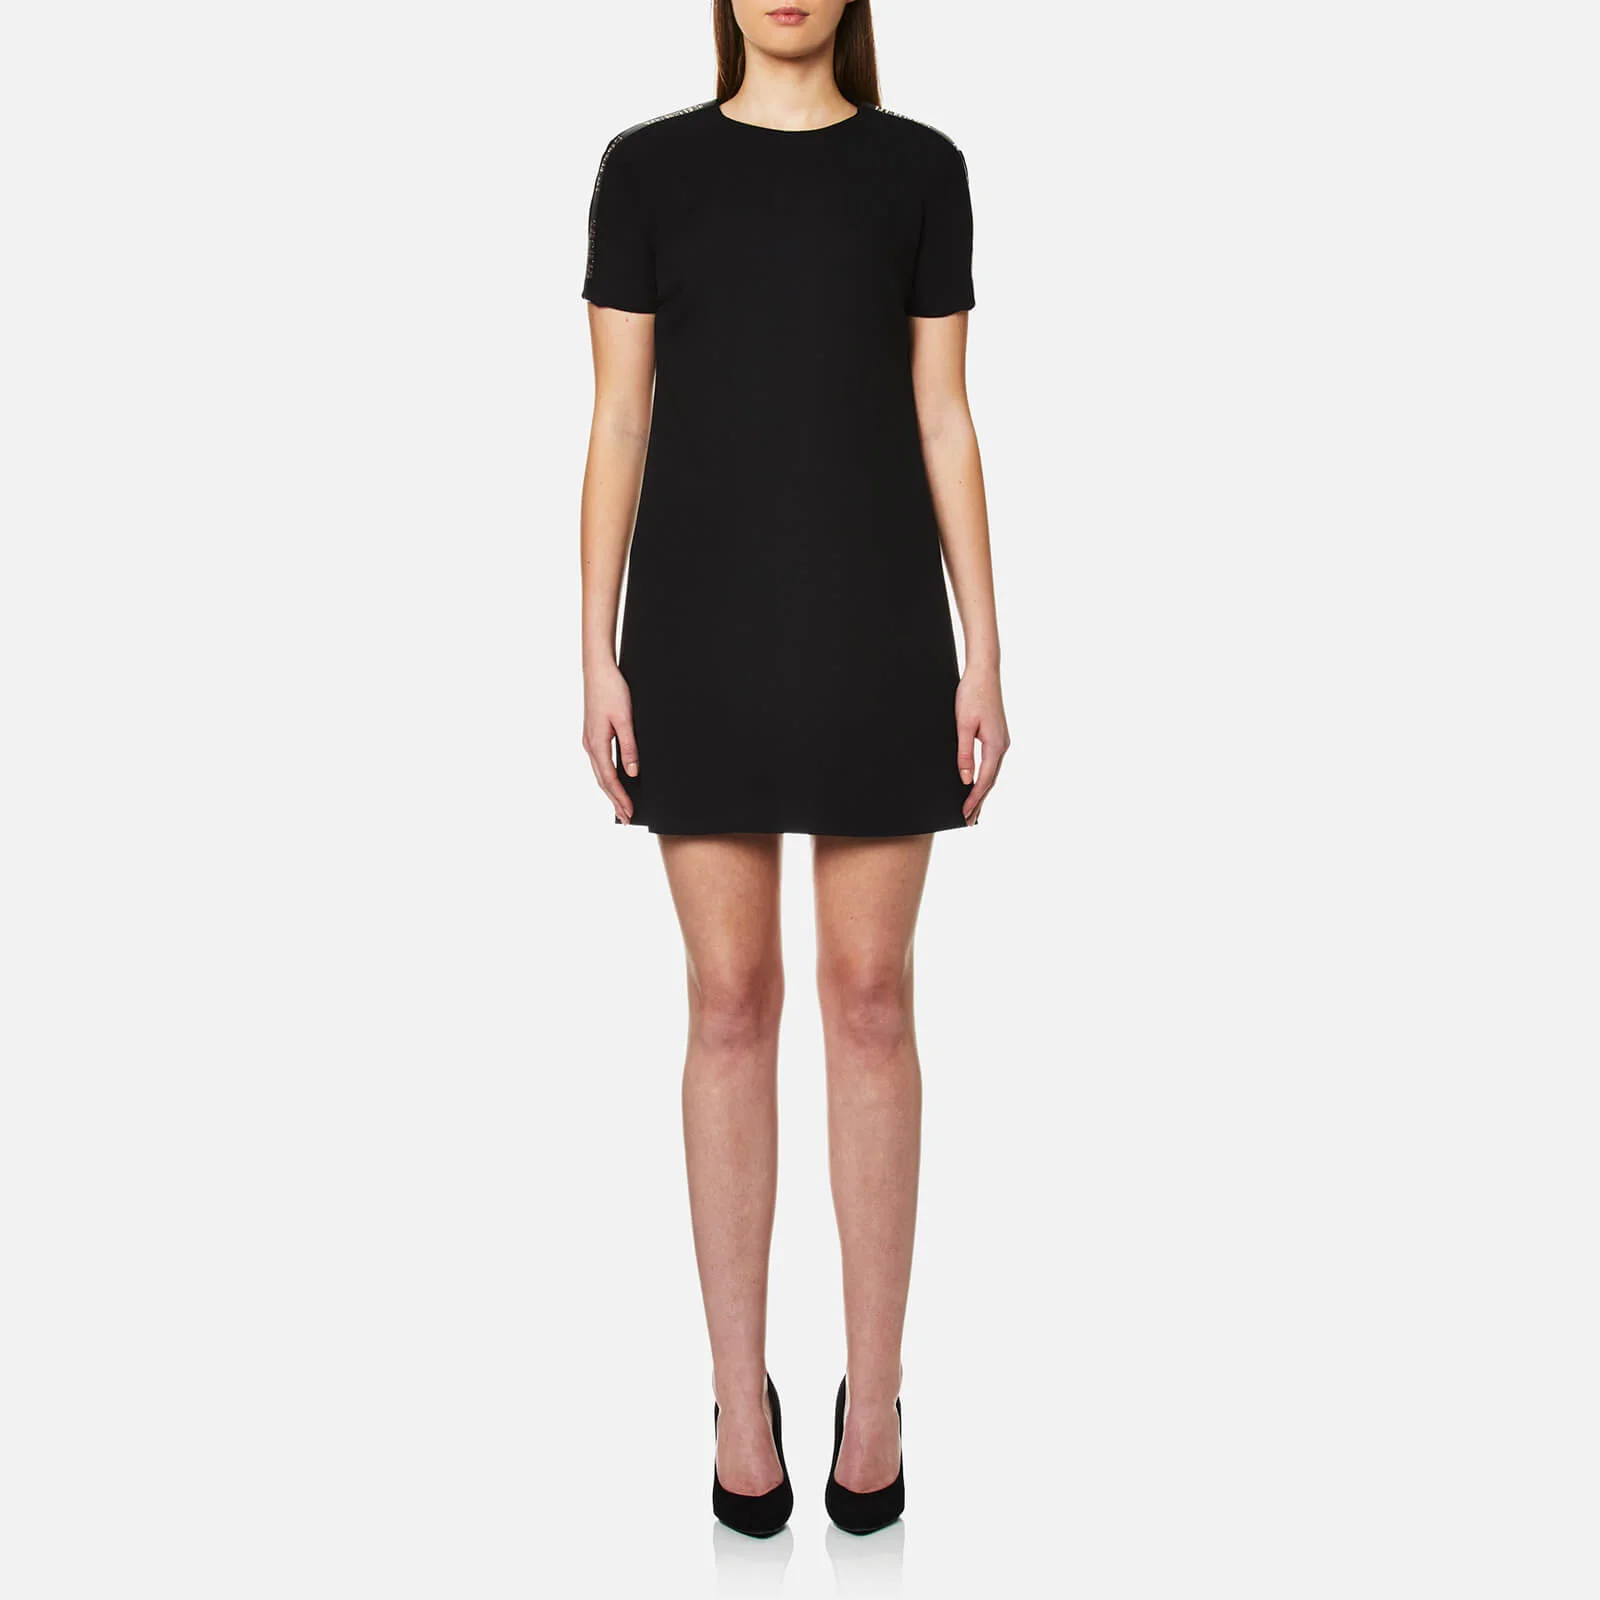 Versus Versace Women's Woven Short Sleeve Shift Dress - Black Image 1